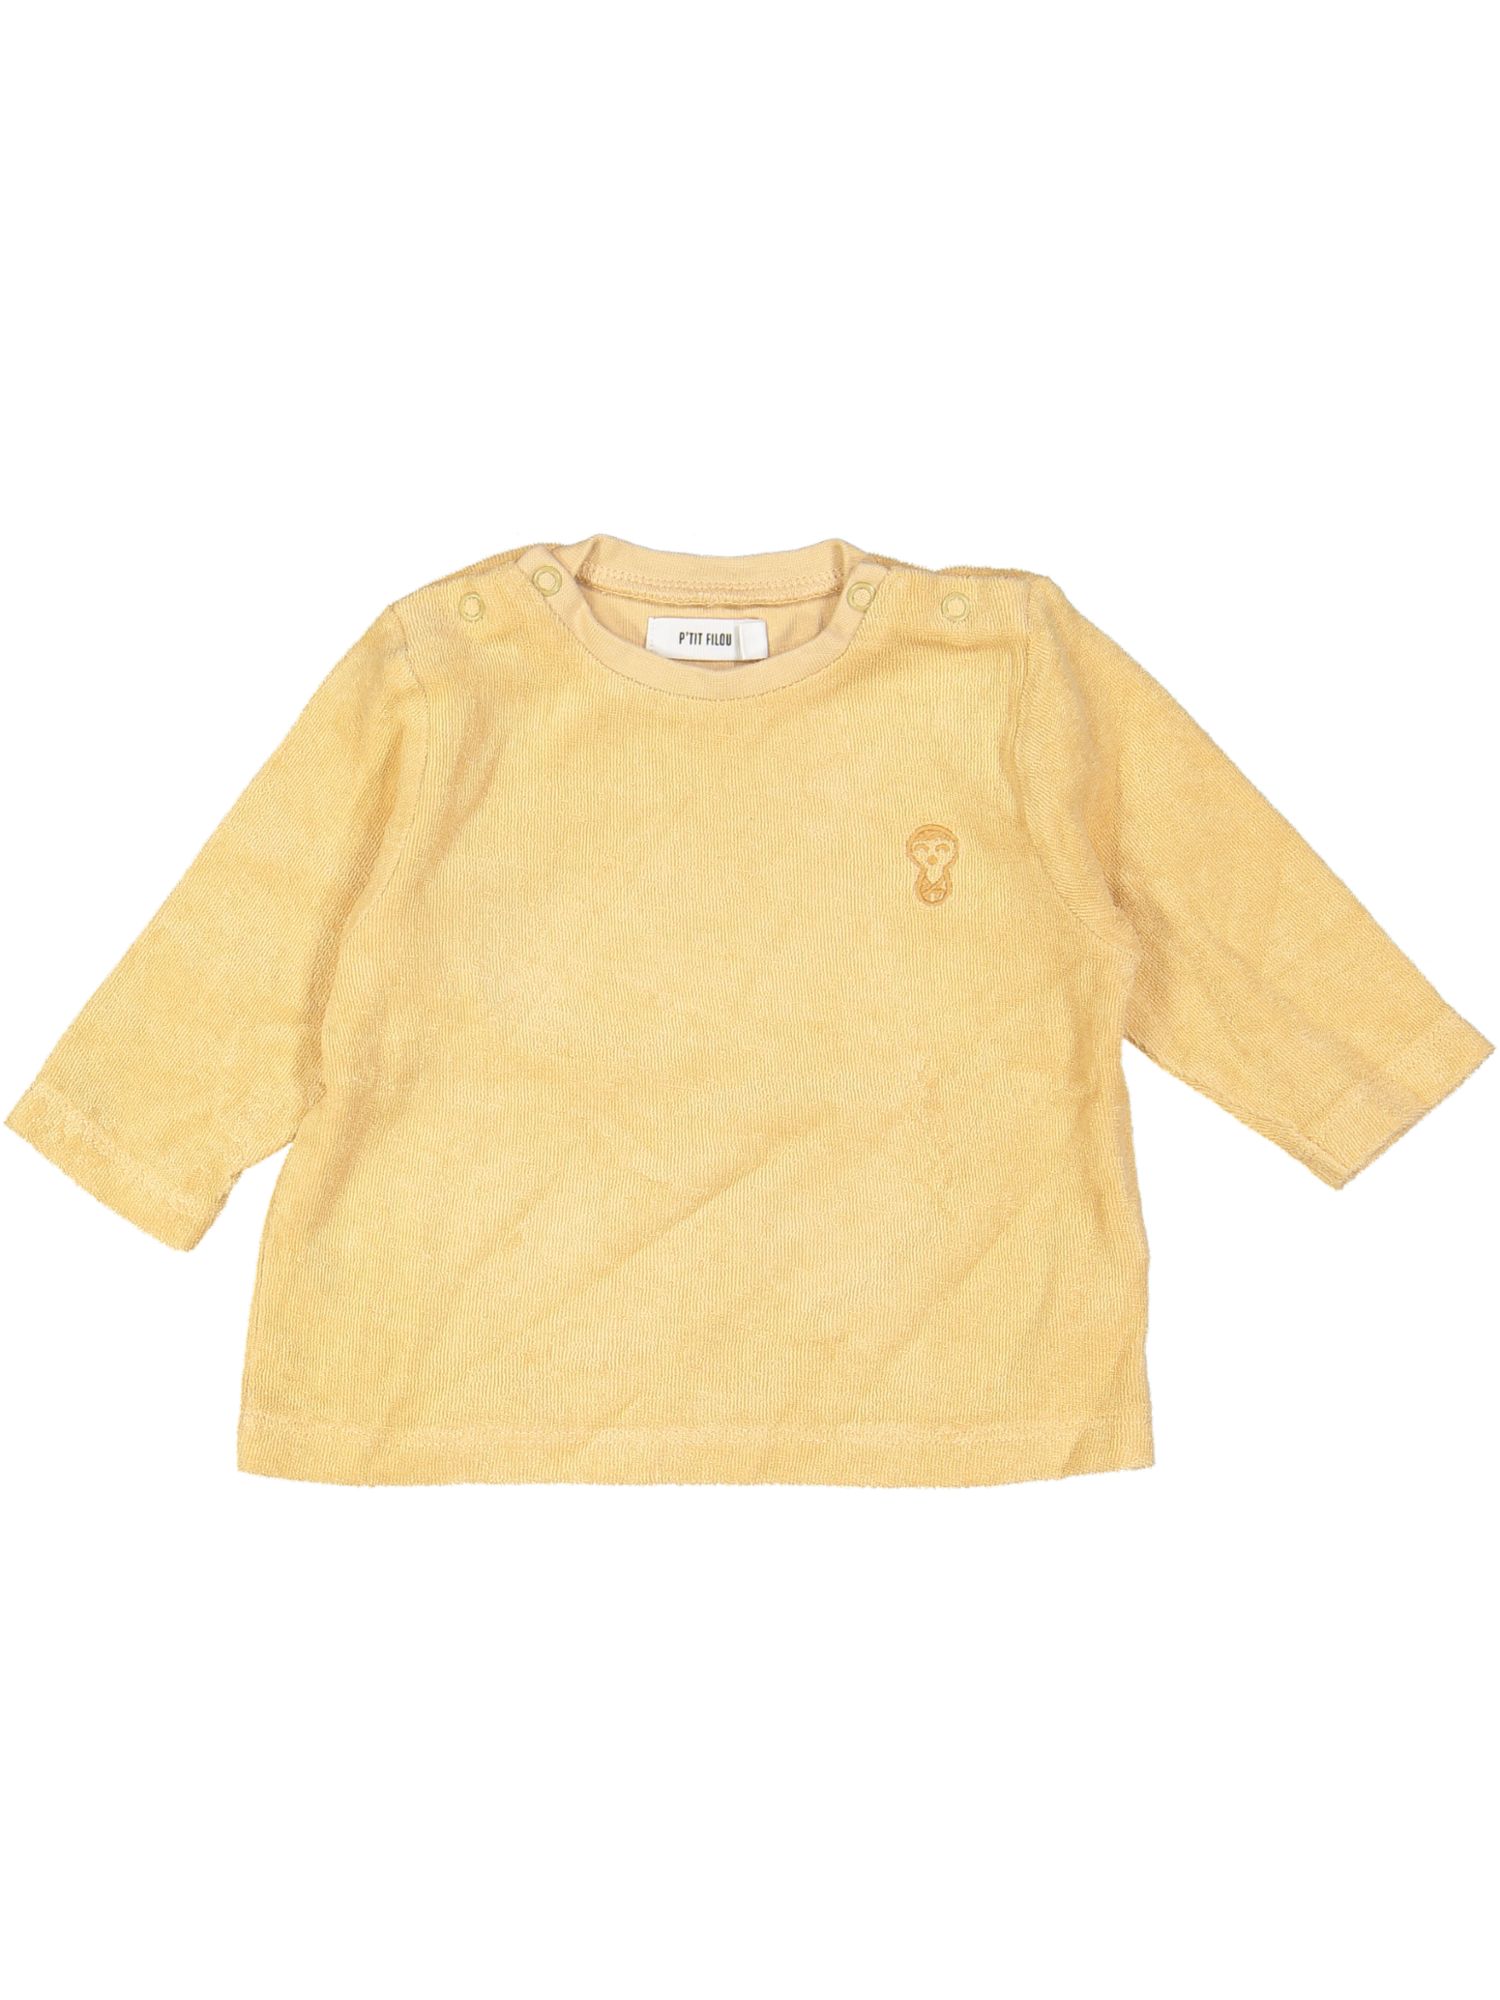 sweater geel spons 03m